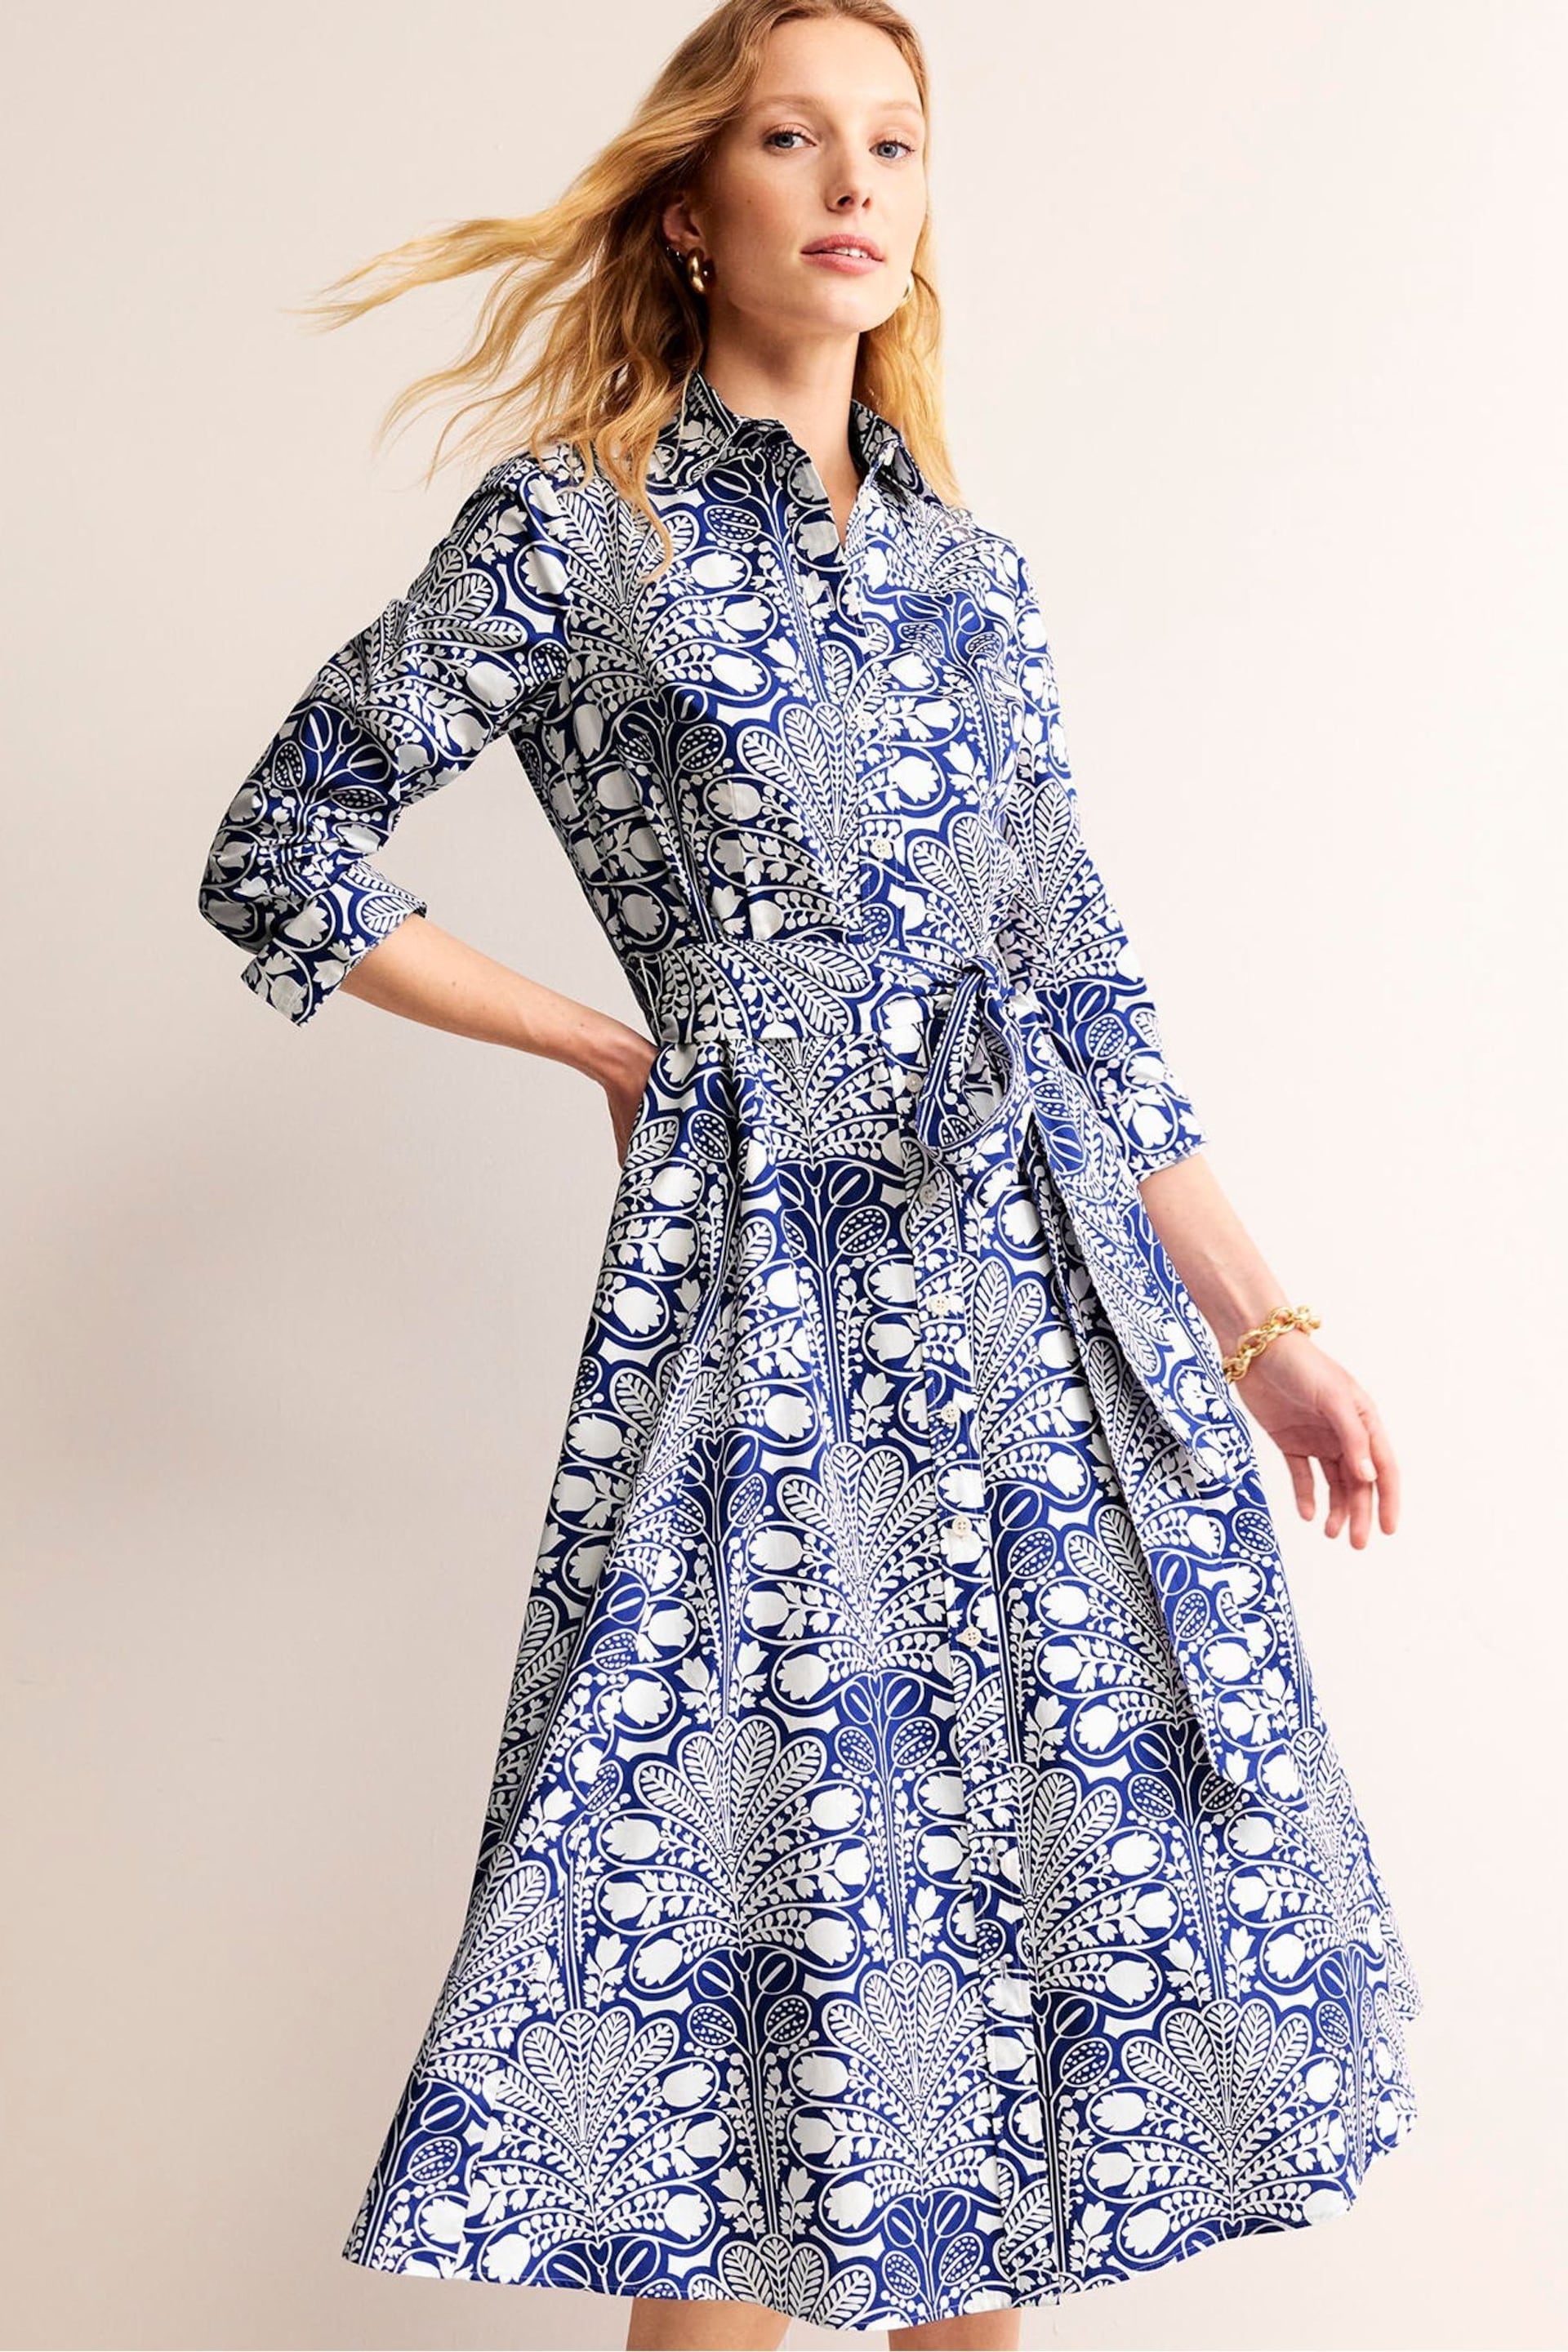 Boden Blue Amy Cotton Midi Shirt Dress - Image 3 of 5